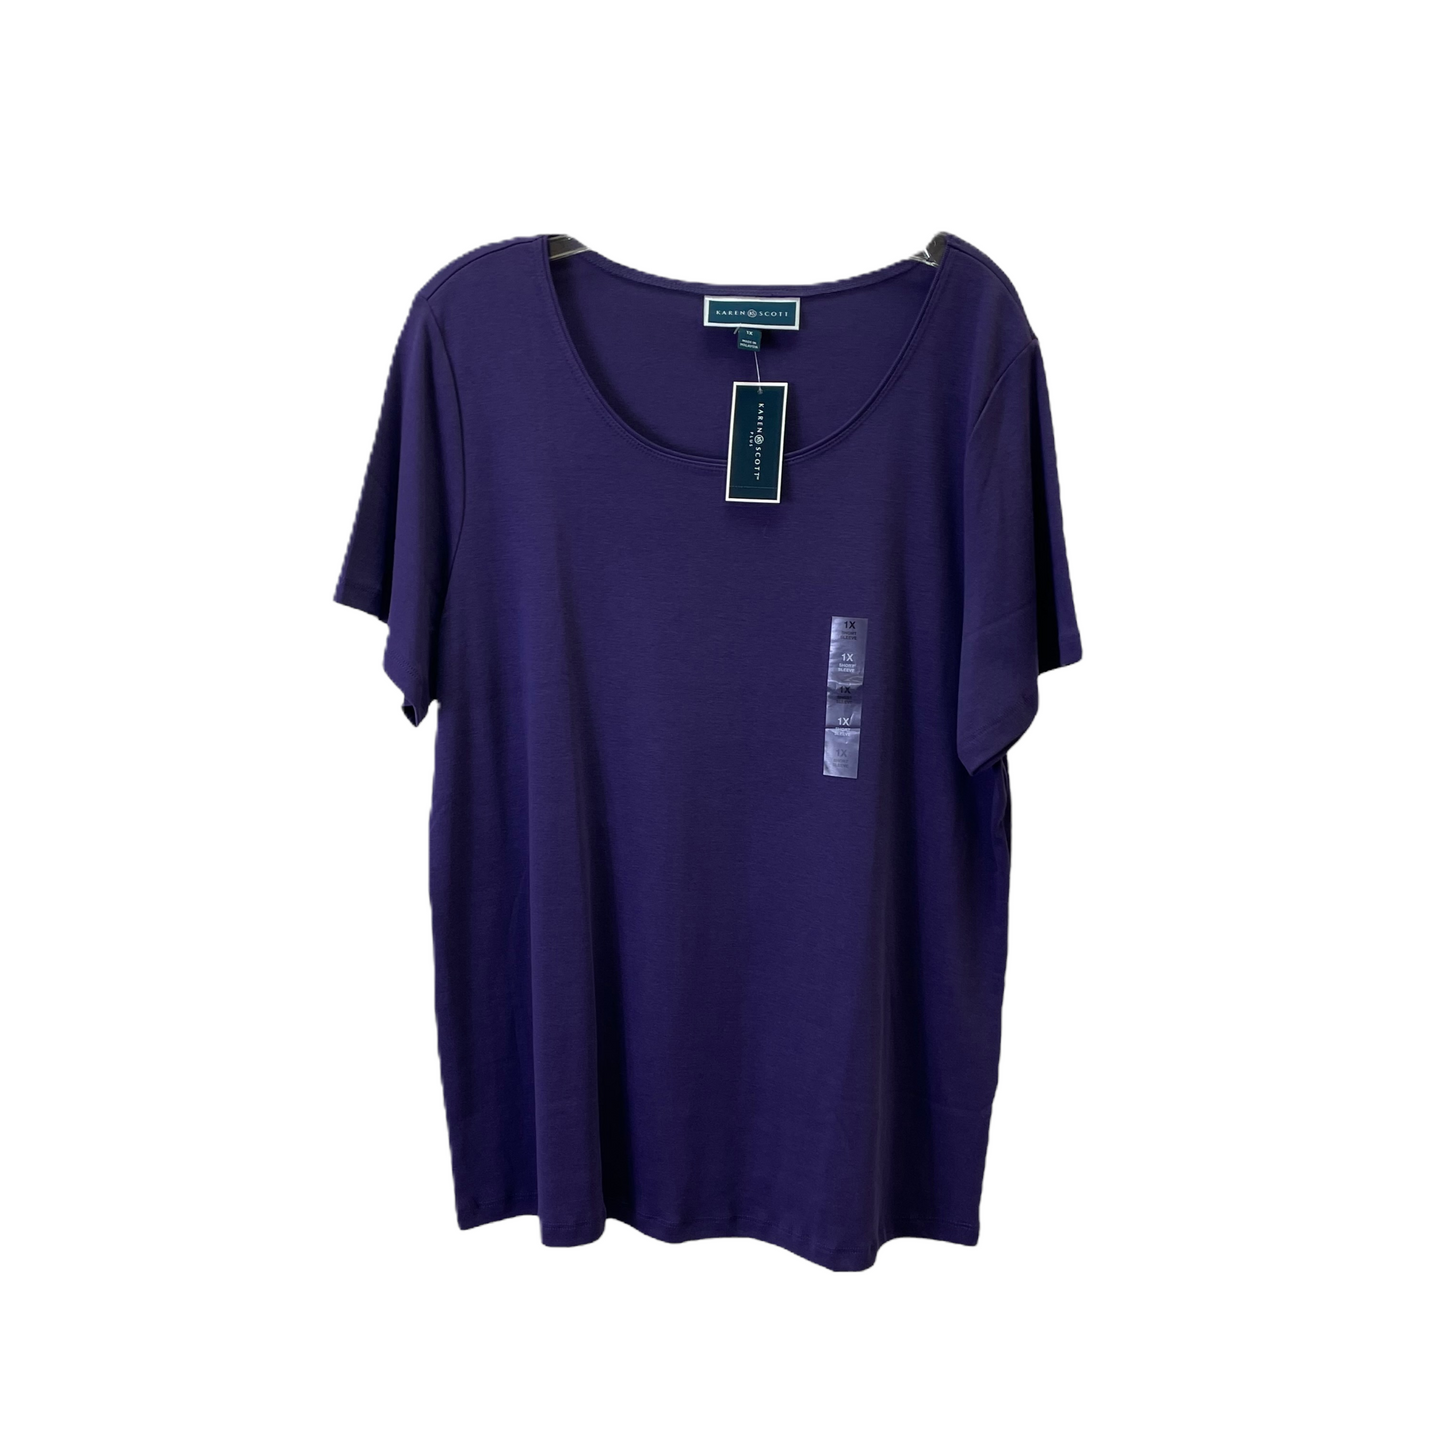 Purple Top Short Sleeve Basic By Karen Scott, Size: 1x